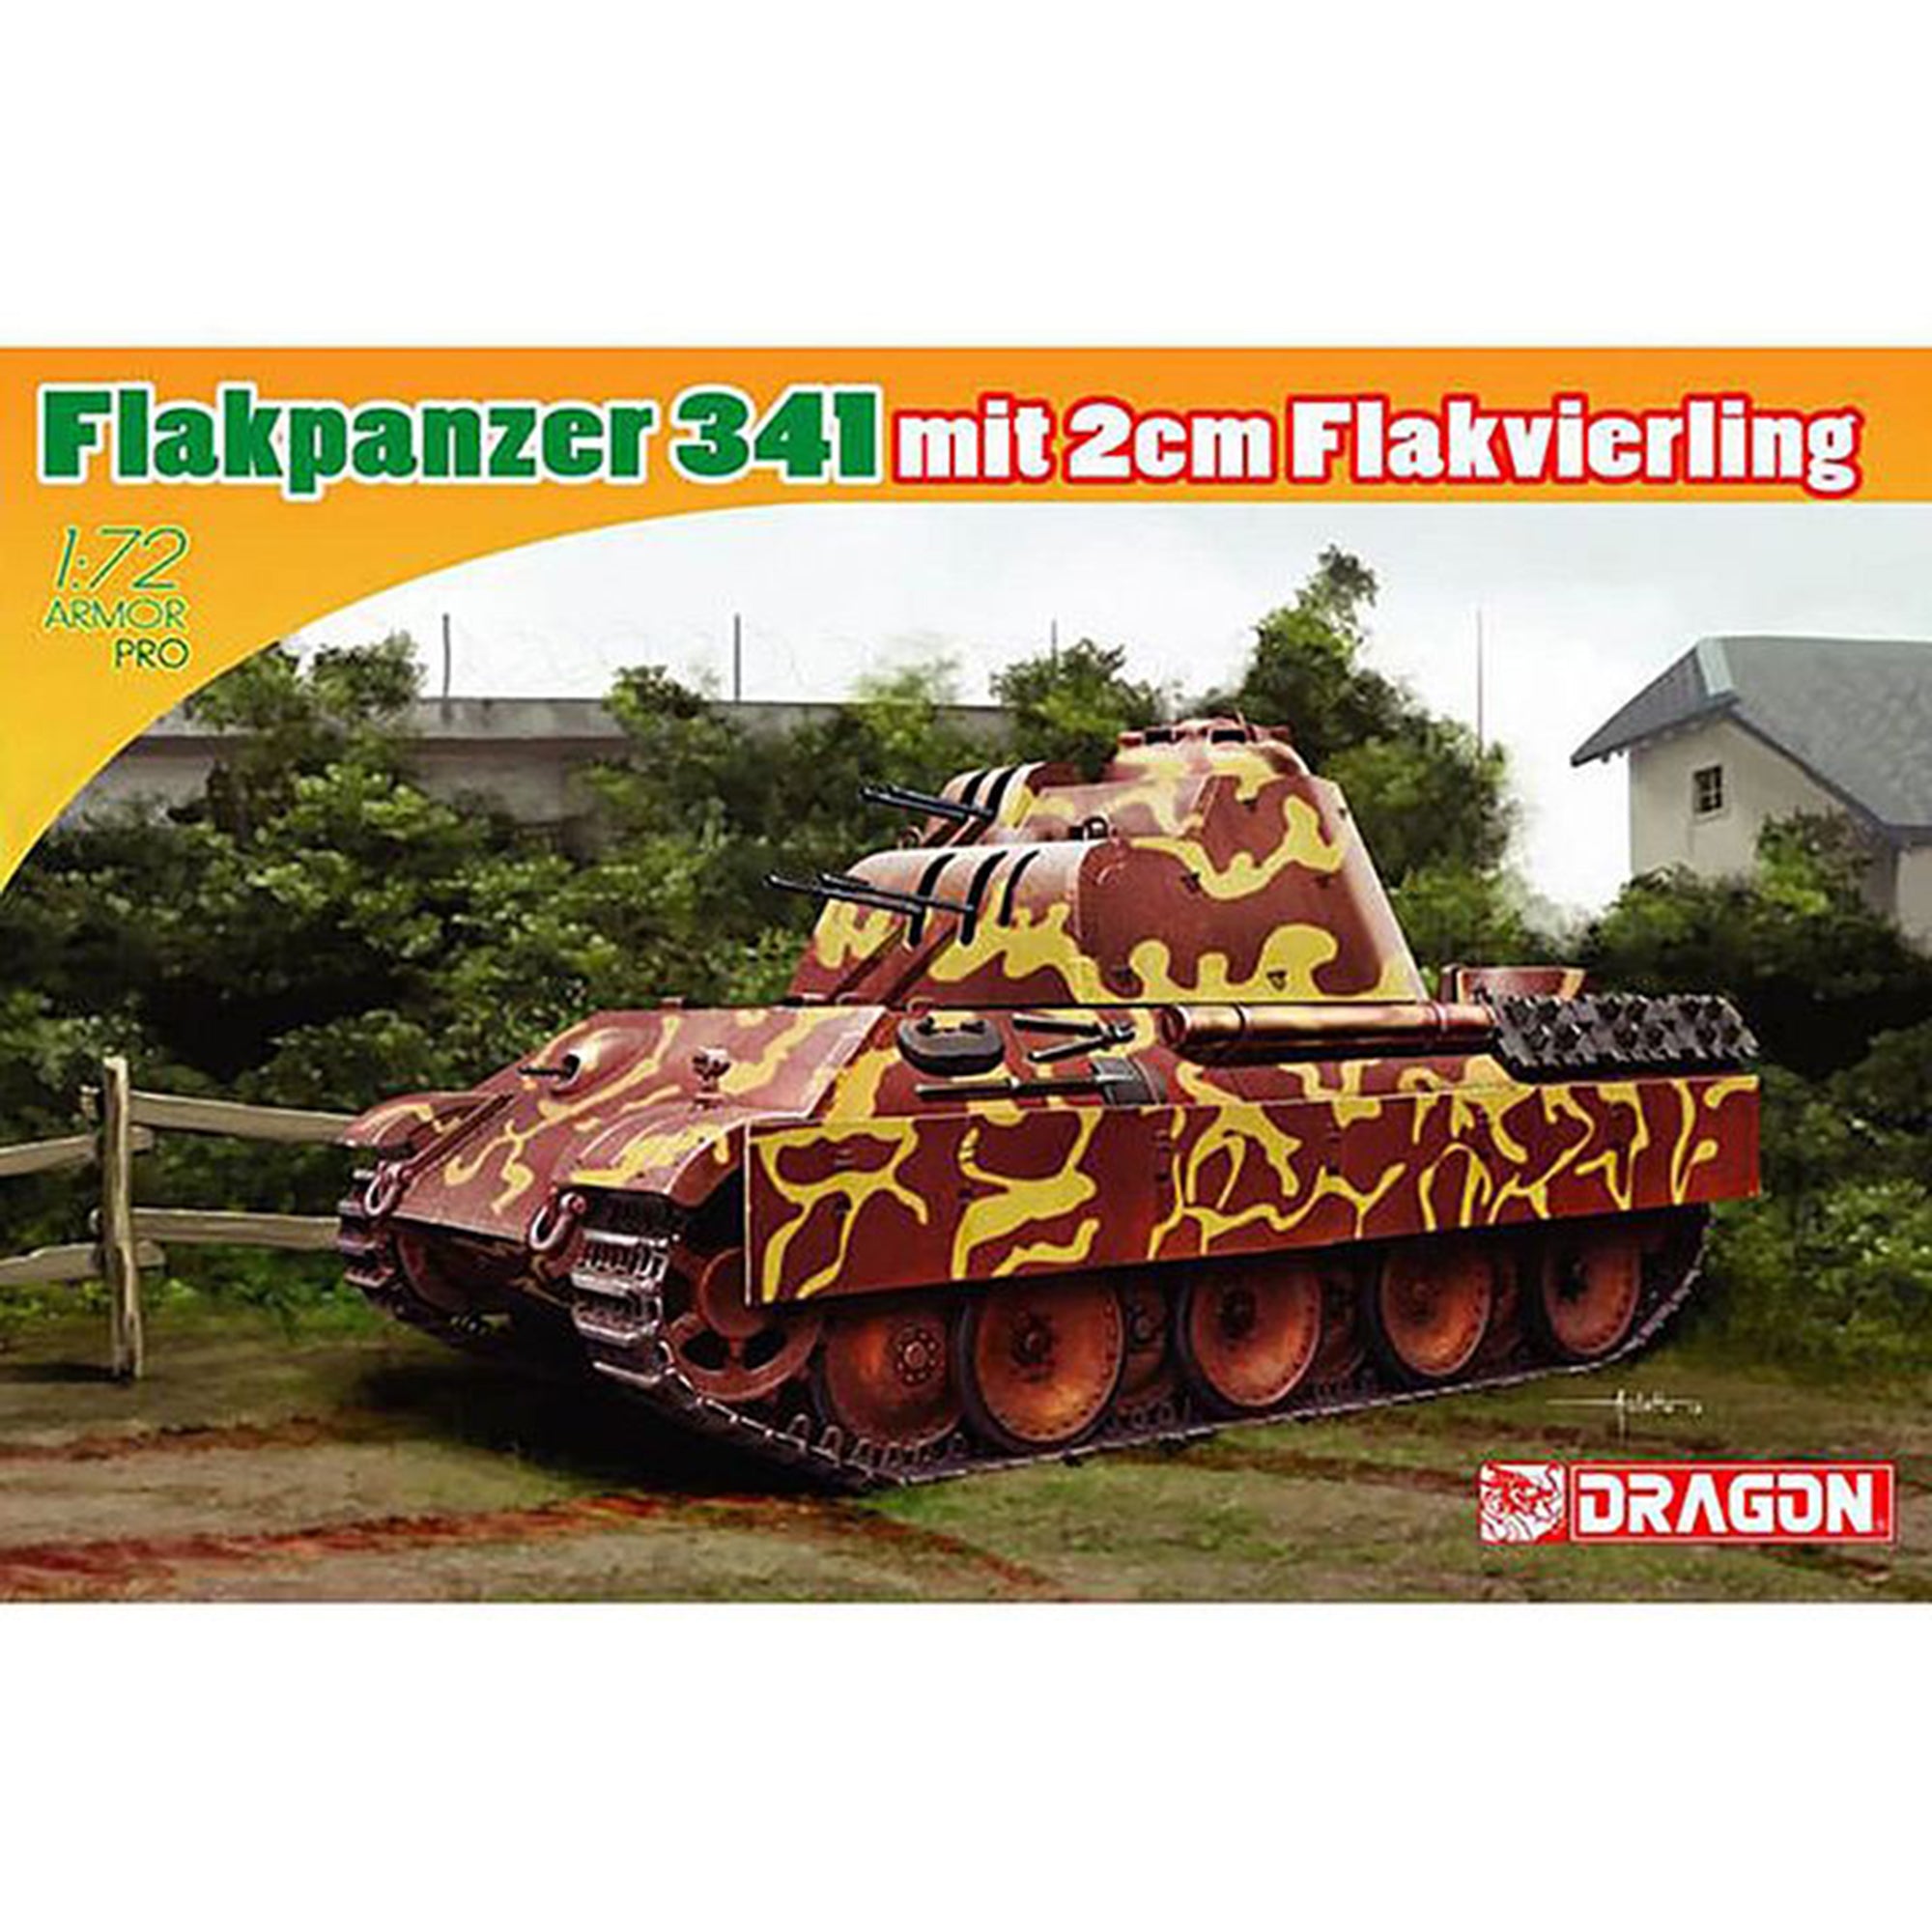 Dragon 7487 1/72 Flakpanzer 341 mit 2cm Flakvierling Model Kit